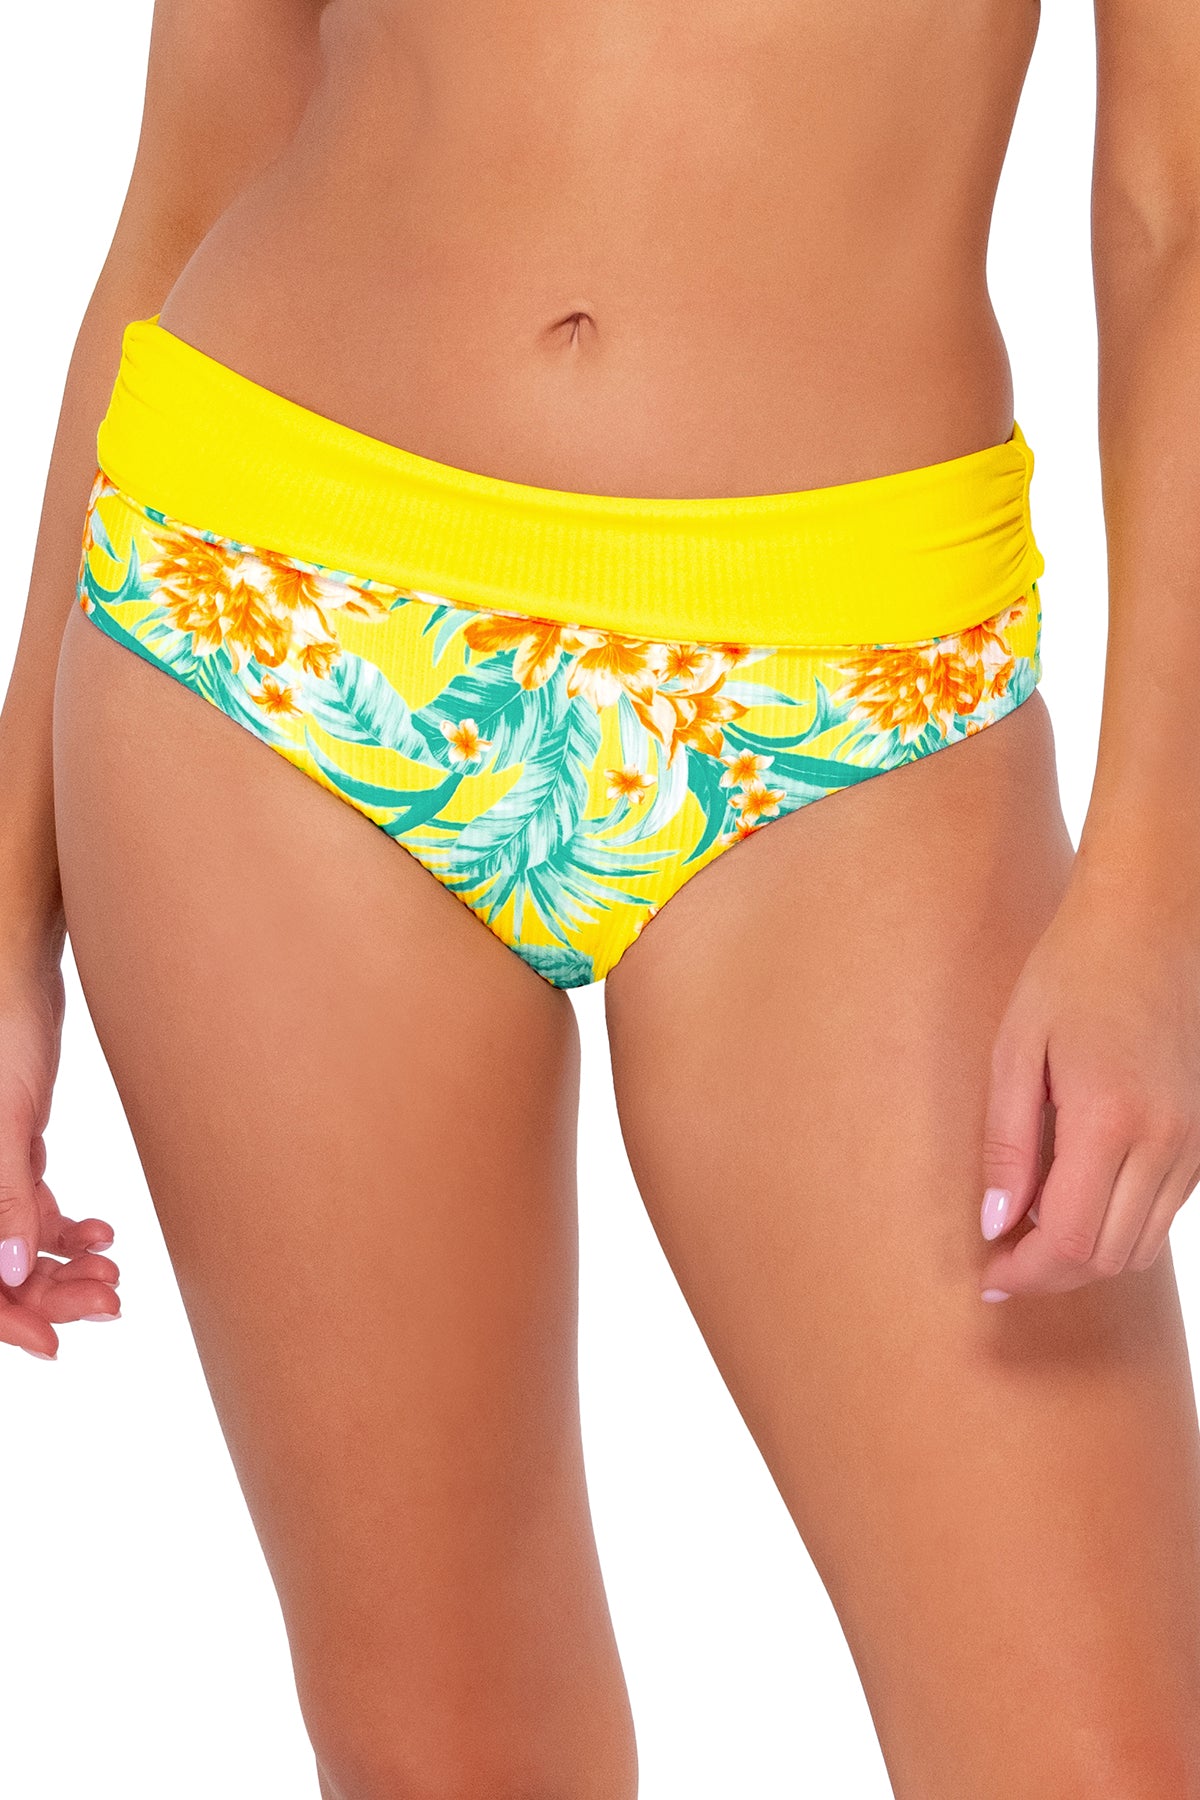 Front pose #1 of Daria wearing Sunsets Golden Tropics Sandbar Rib Capri High Waist Bottom showing folded waist